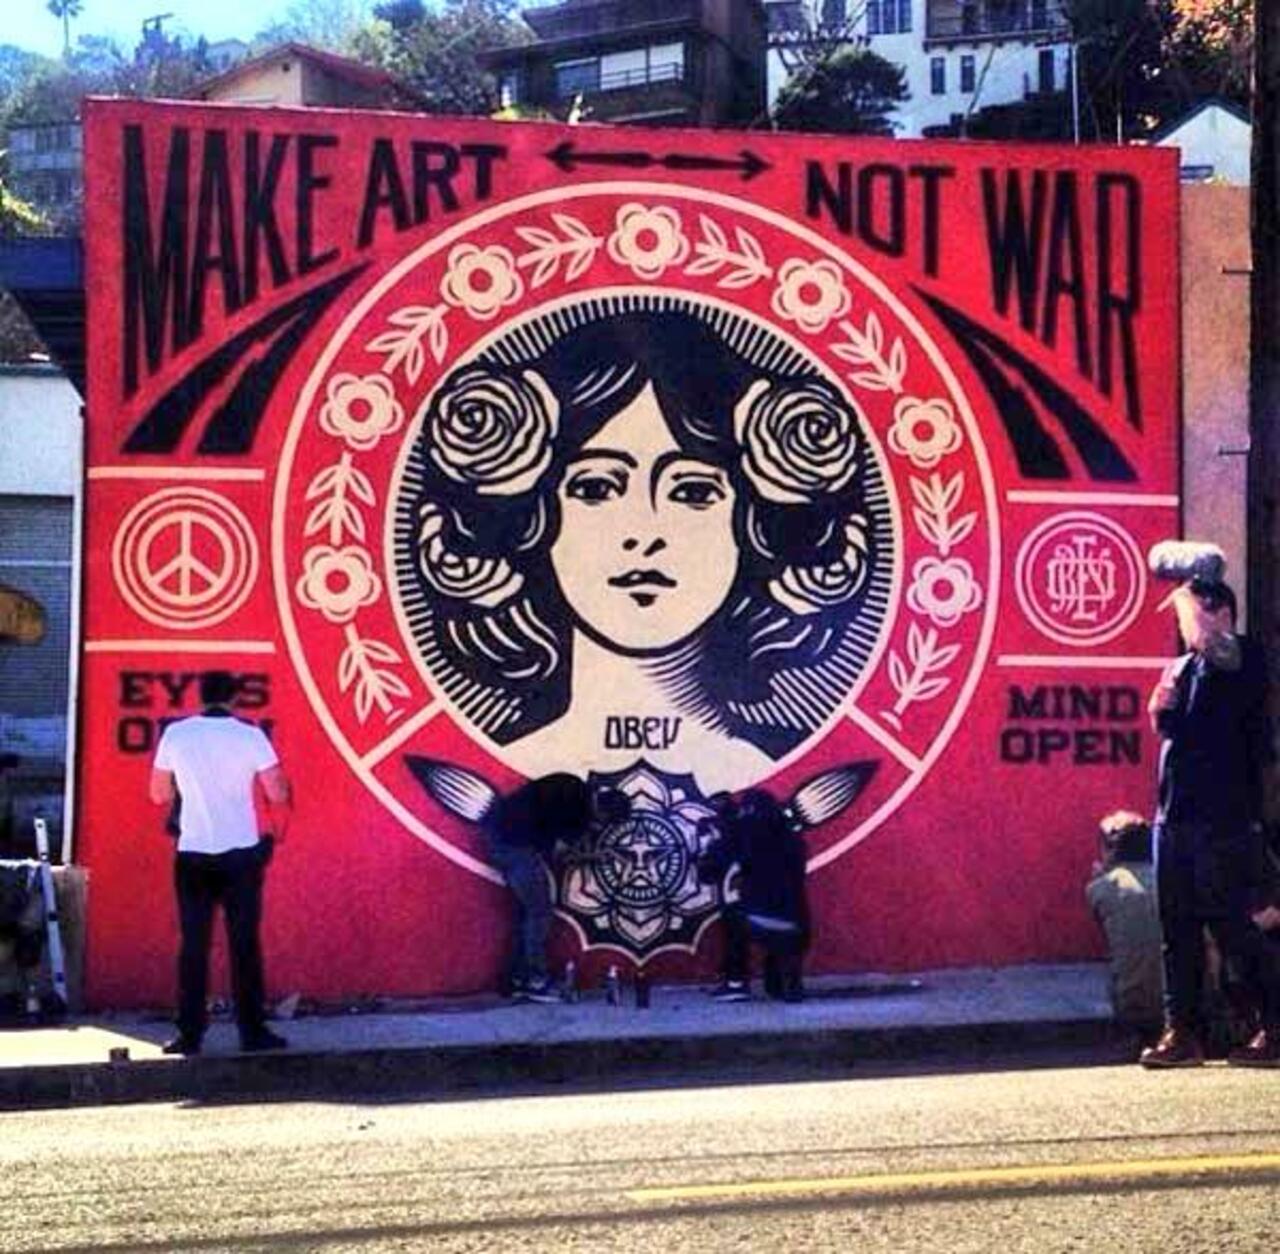 “@myadreams: "@CuocoDaTe: "@Pitchuskita: Obey (Shepard Fairey)
#streetart #art #graffiti #mural http://t.co/11wCvCITiW""”